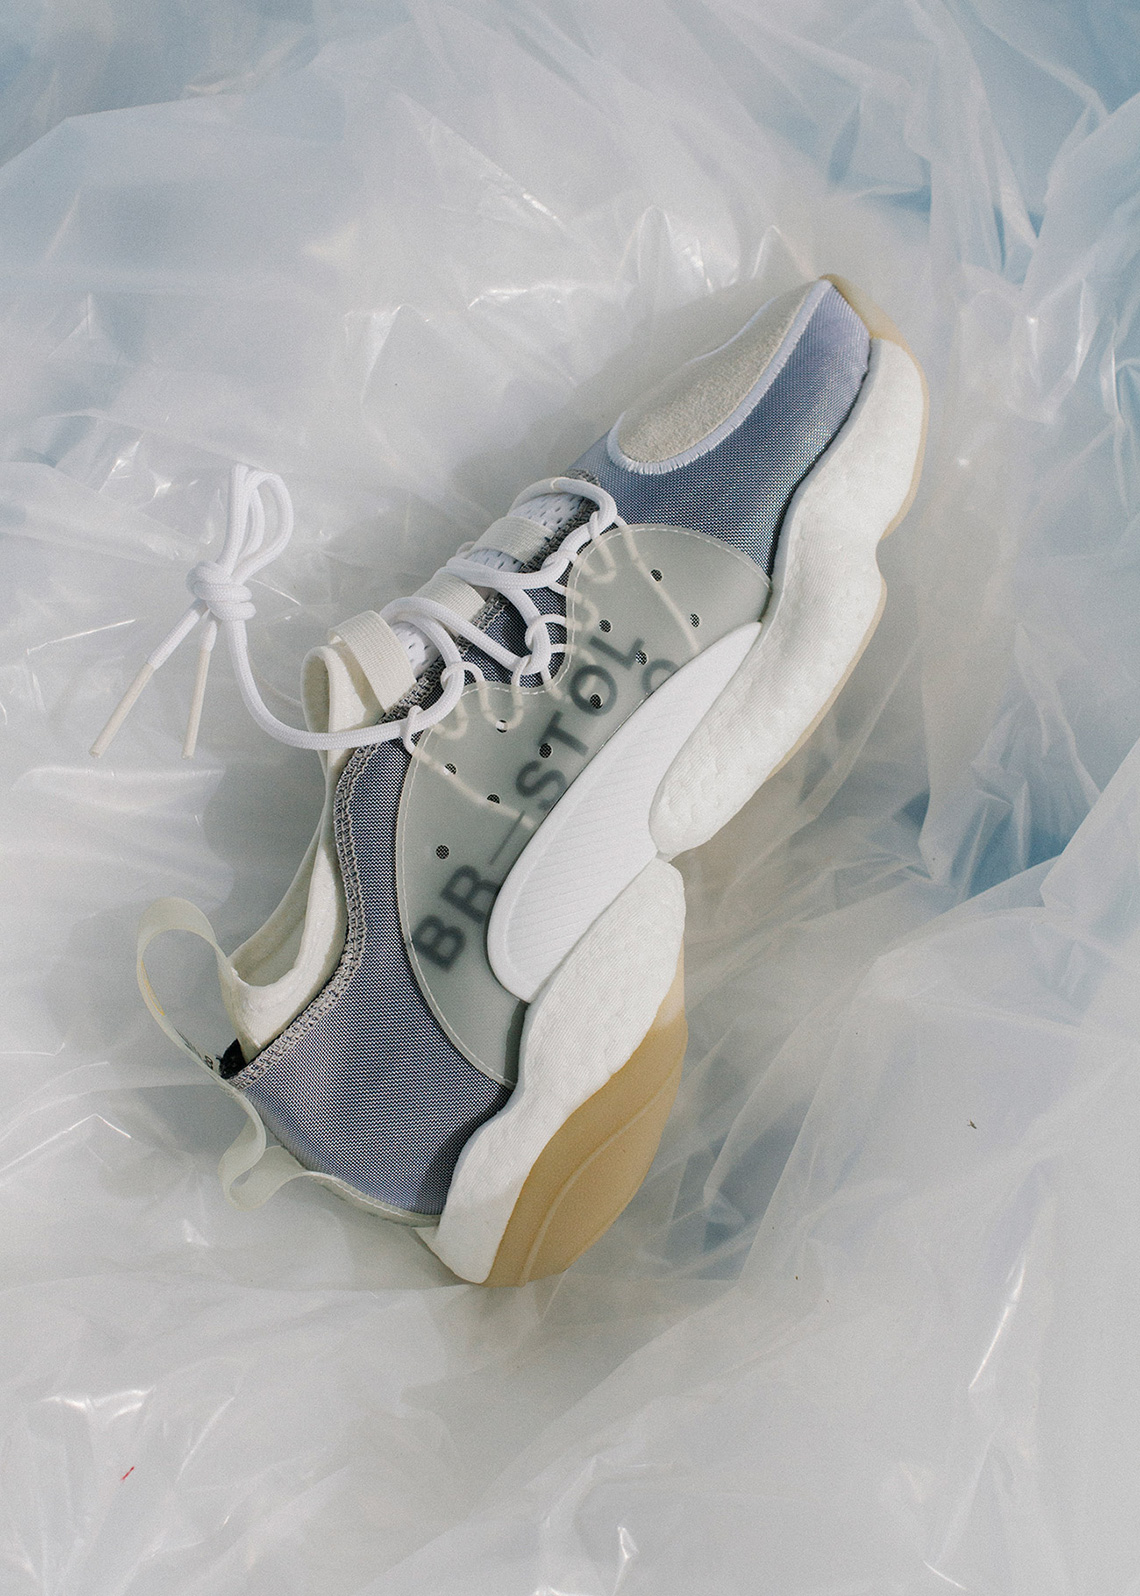 Bristol Studio adidas Crazy BYW The Shoe Surgeon Release | SneakerNews.com